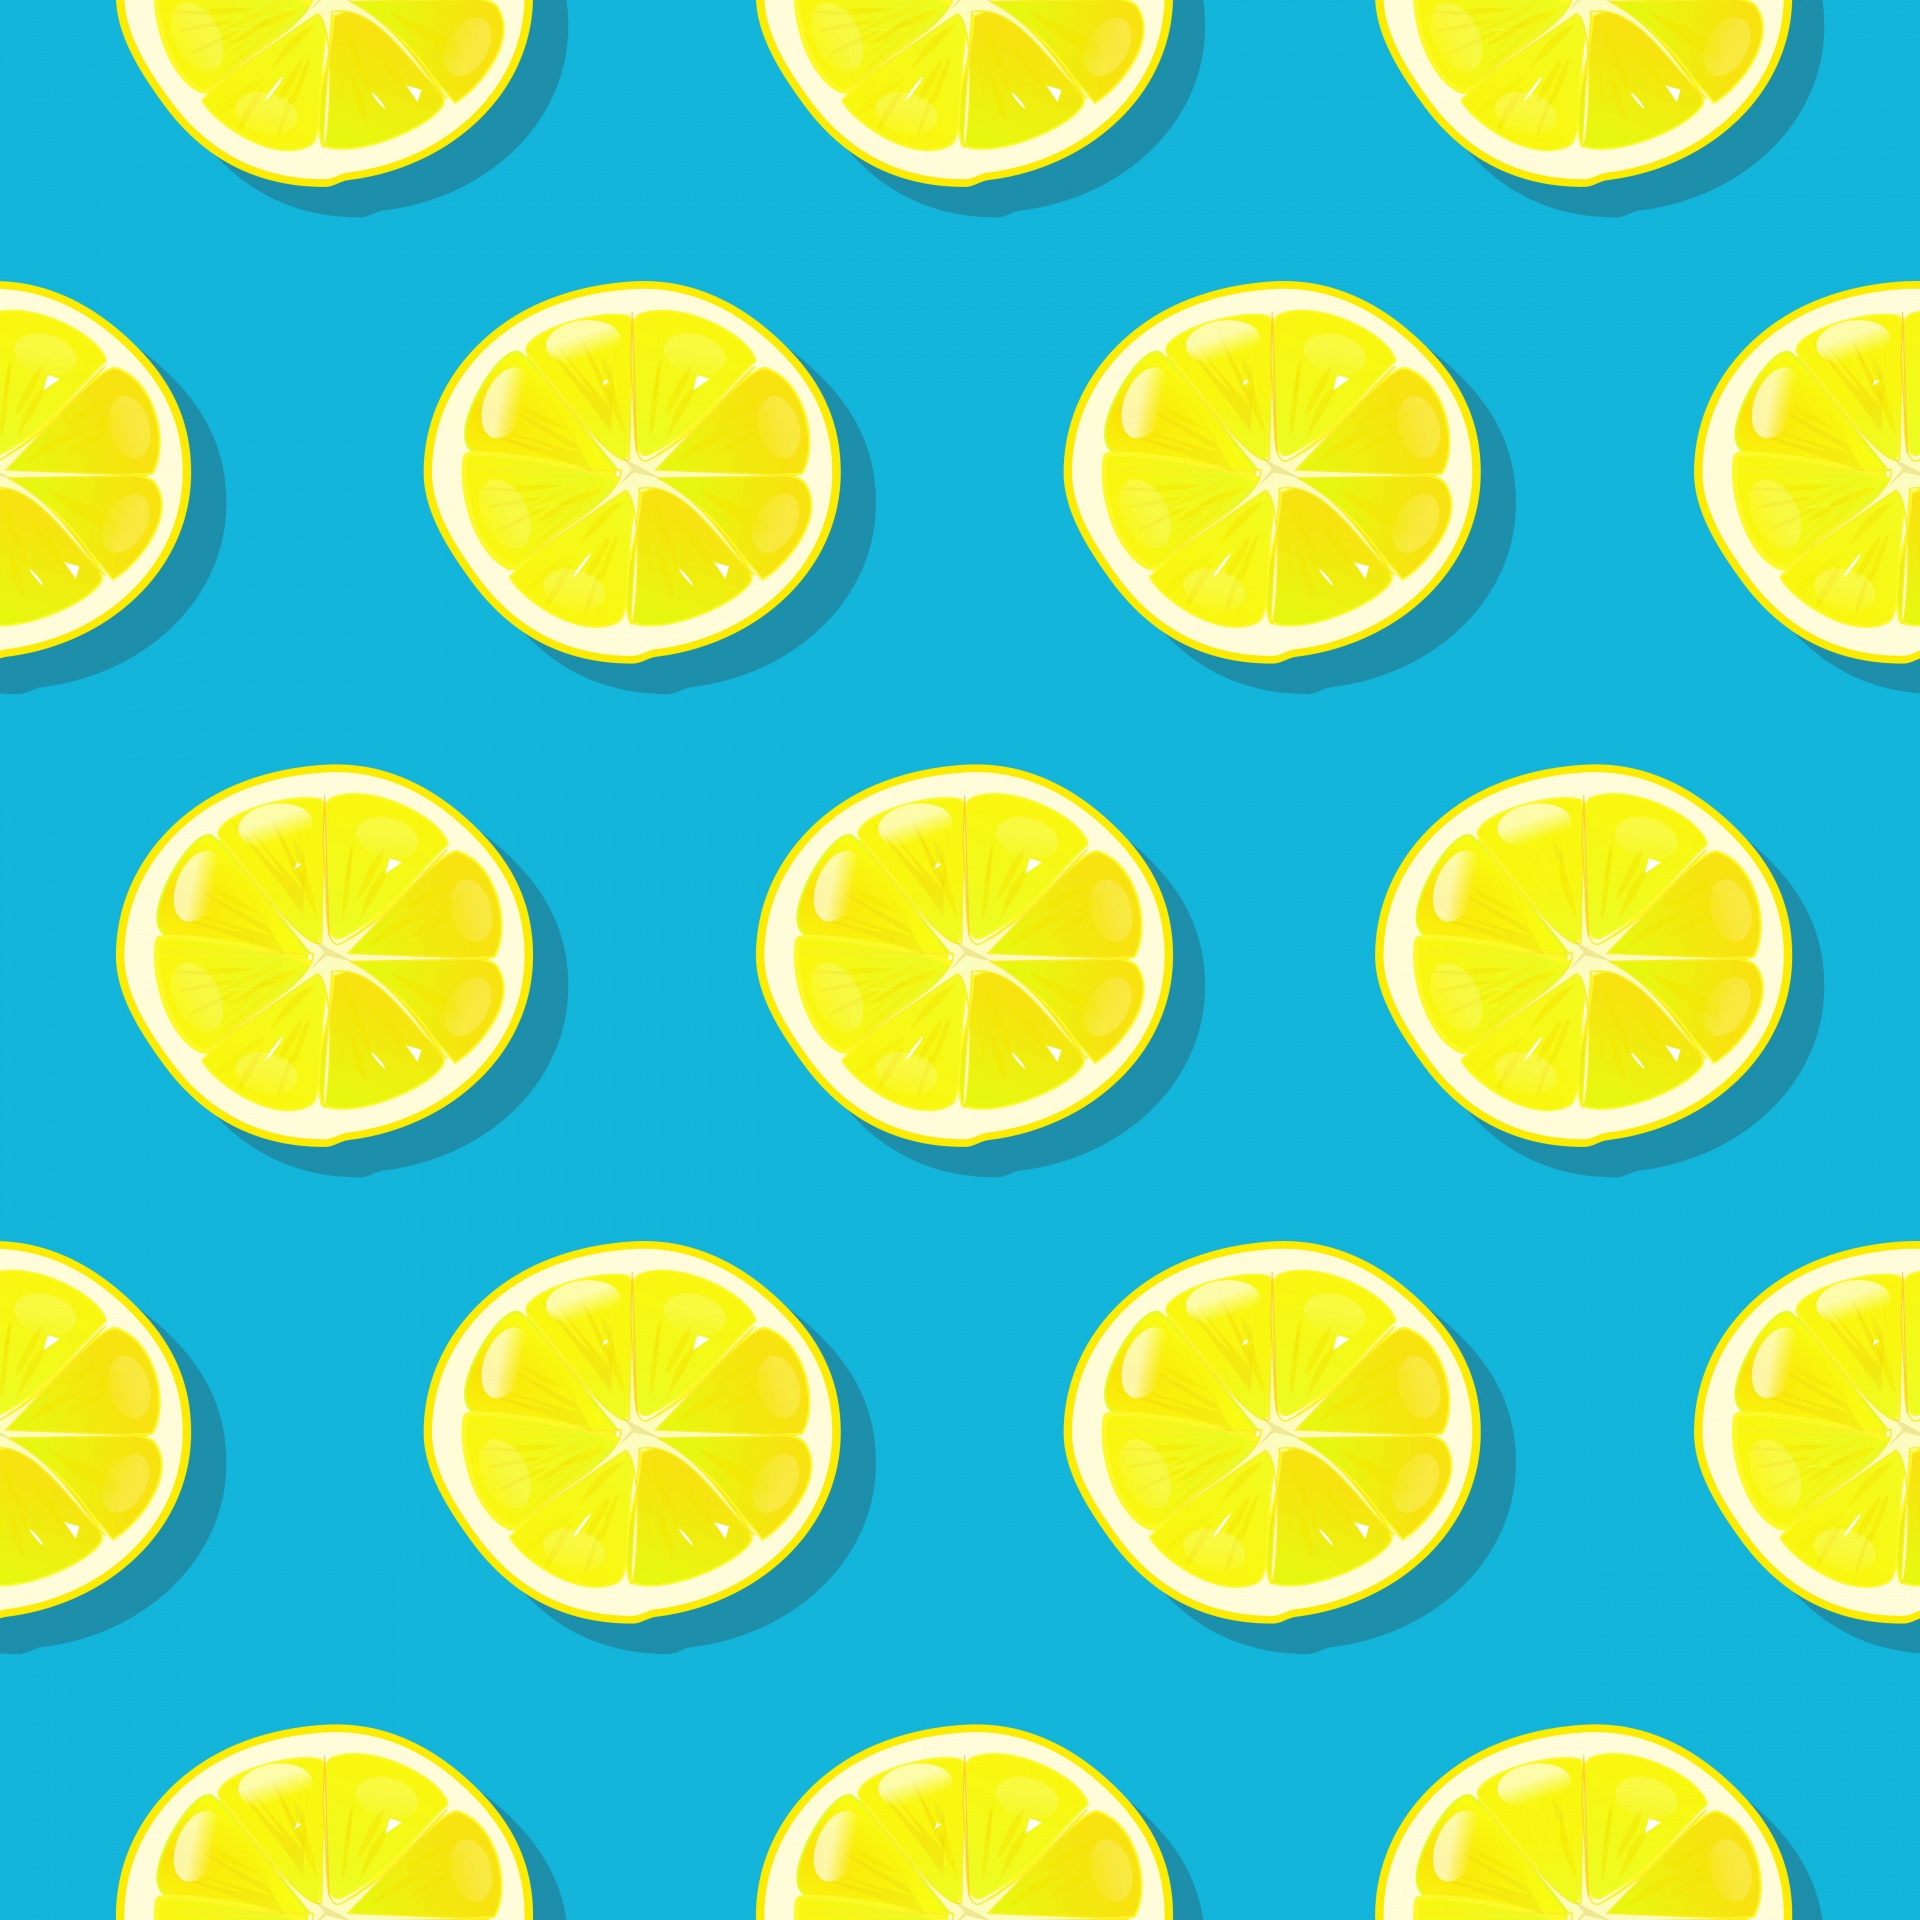 Yellow lemon slices on blue background seamless pattern wallpaper